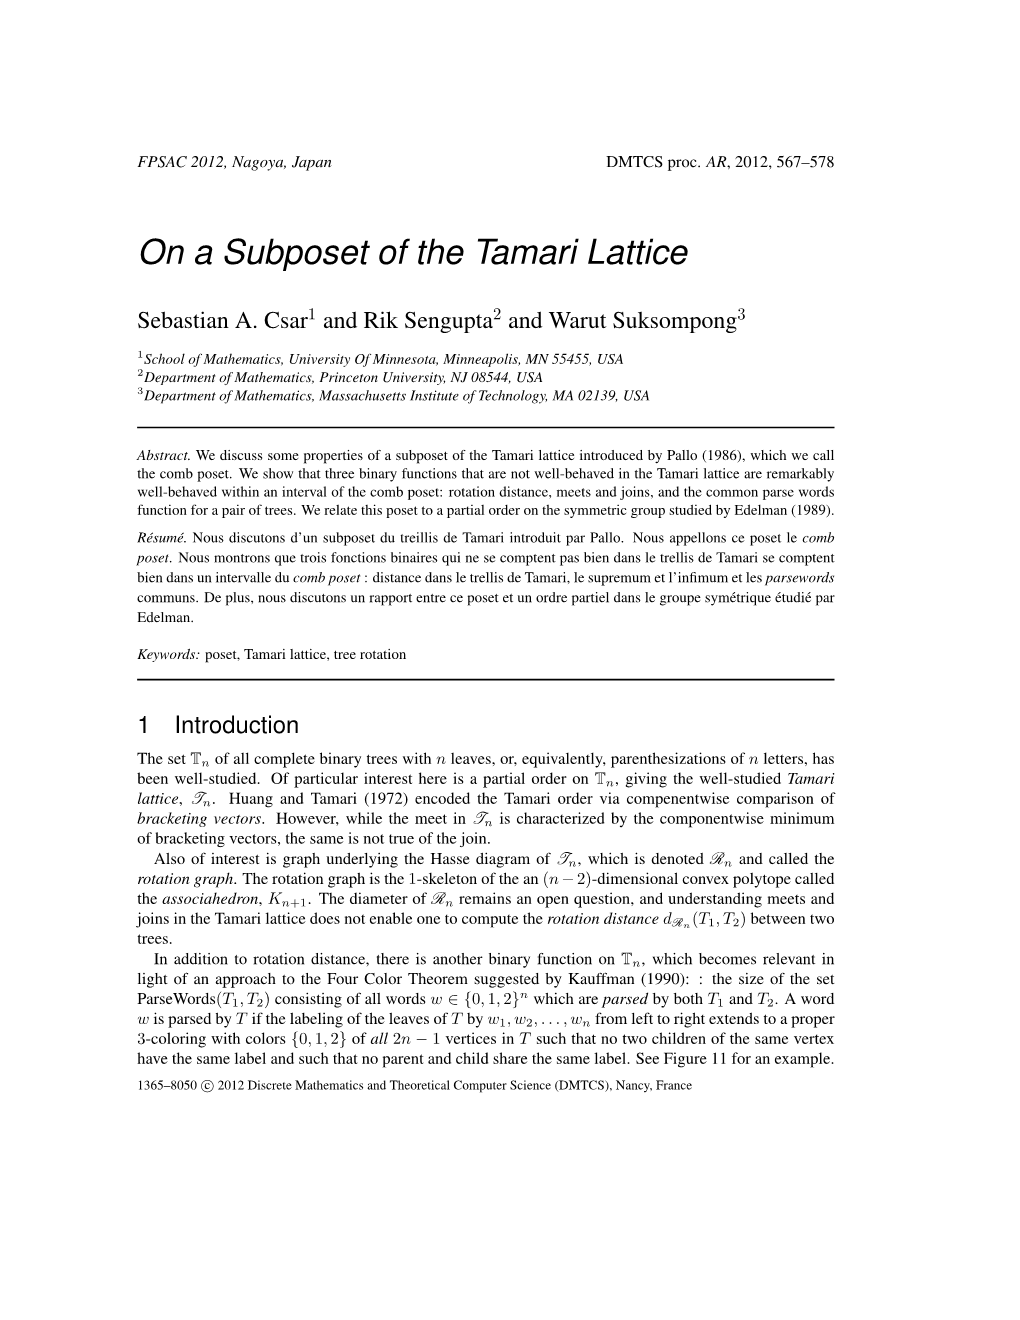 On a Subposet of the Tamari Lattice